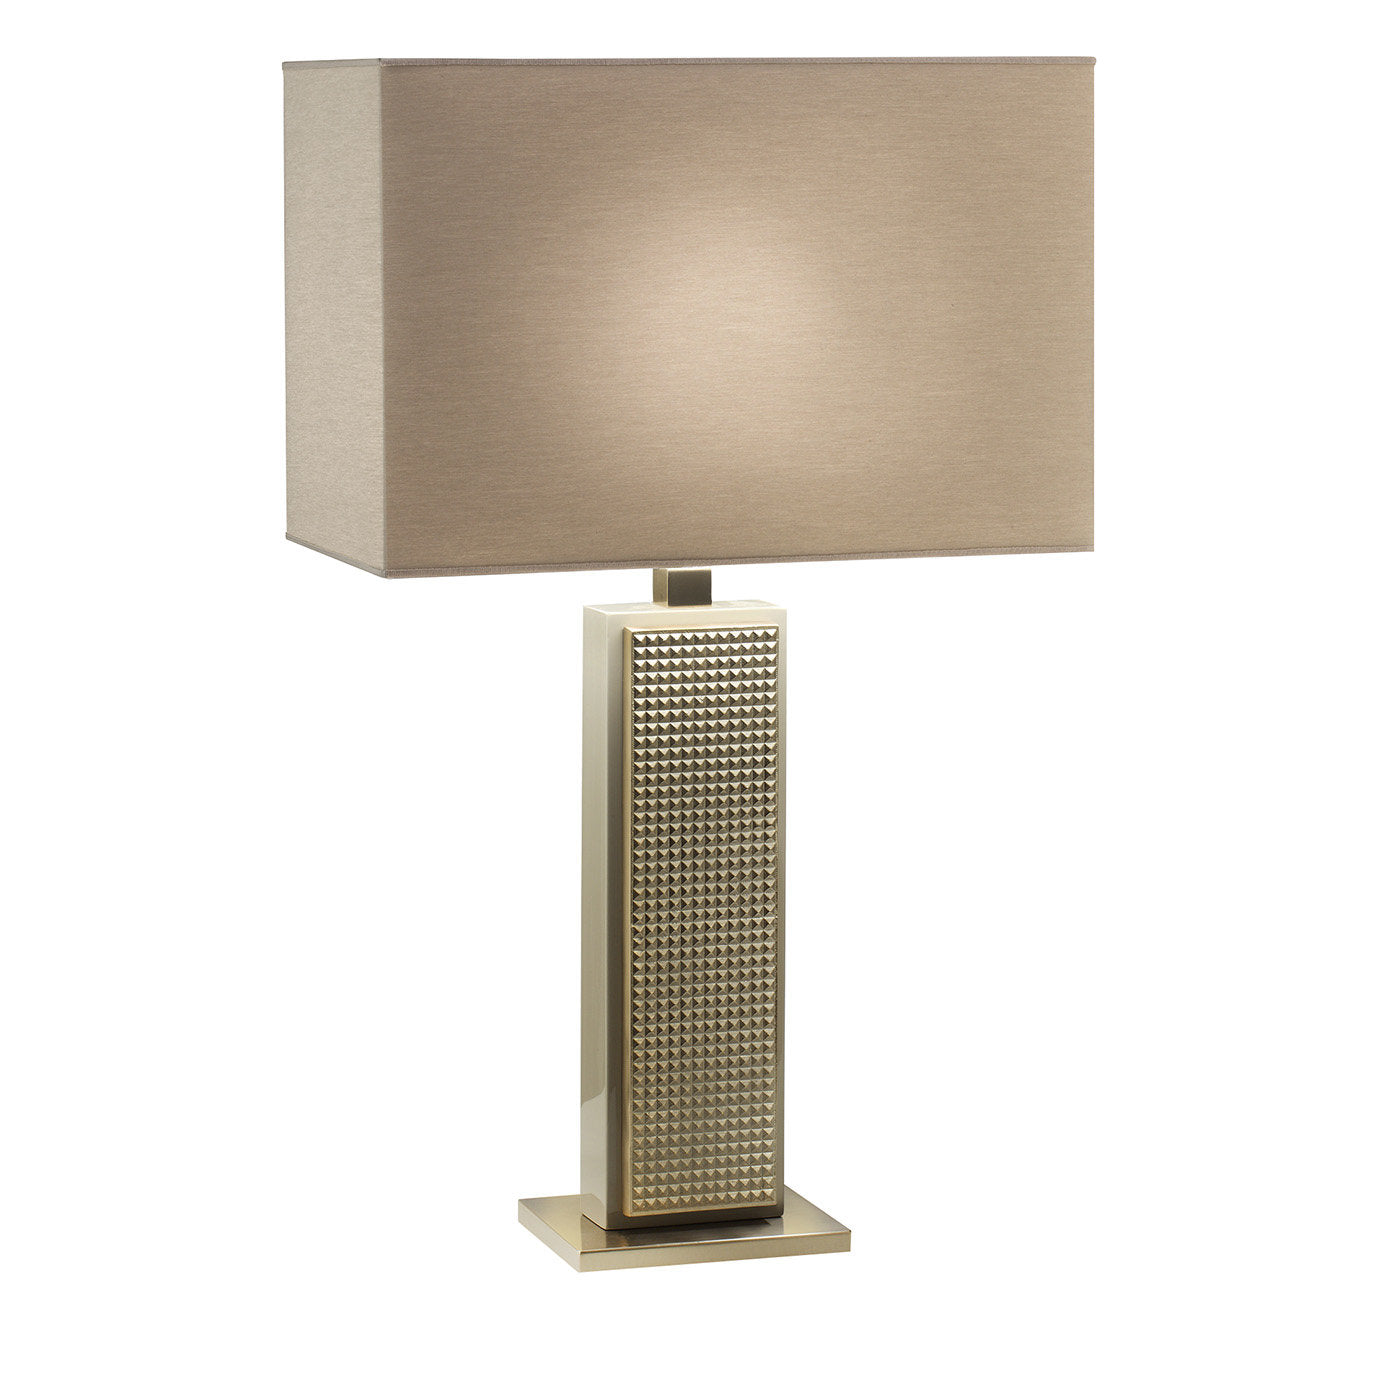 Cobalto Gold Table Lamp #1 - Main view